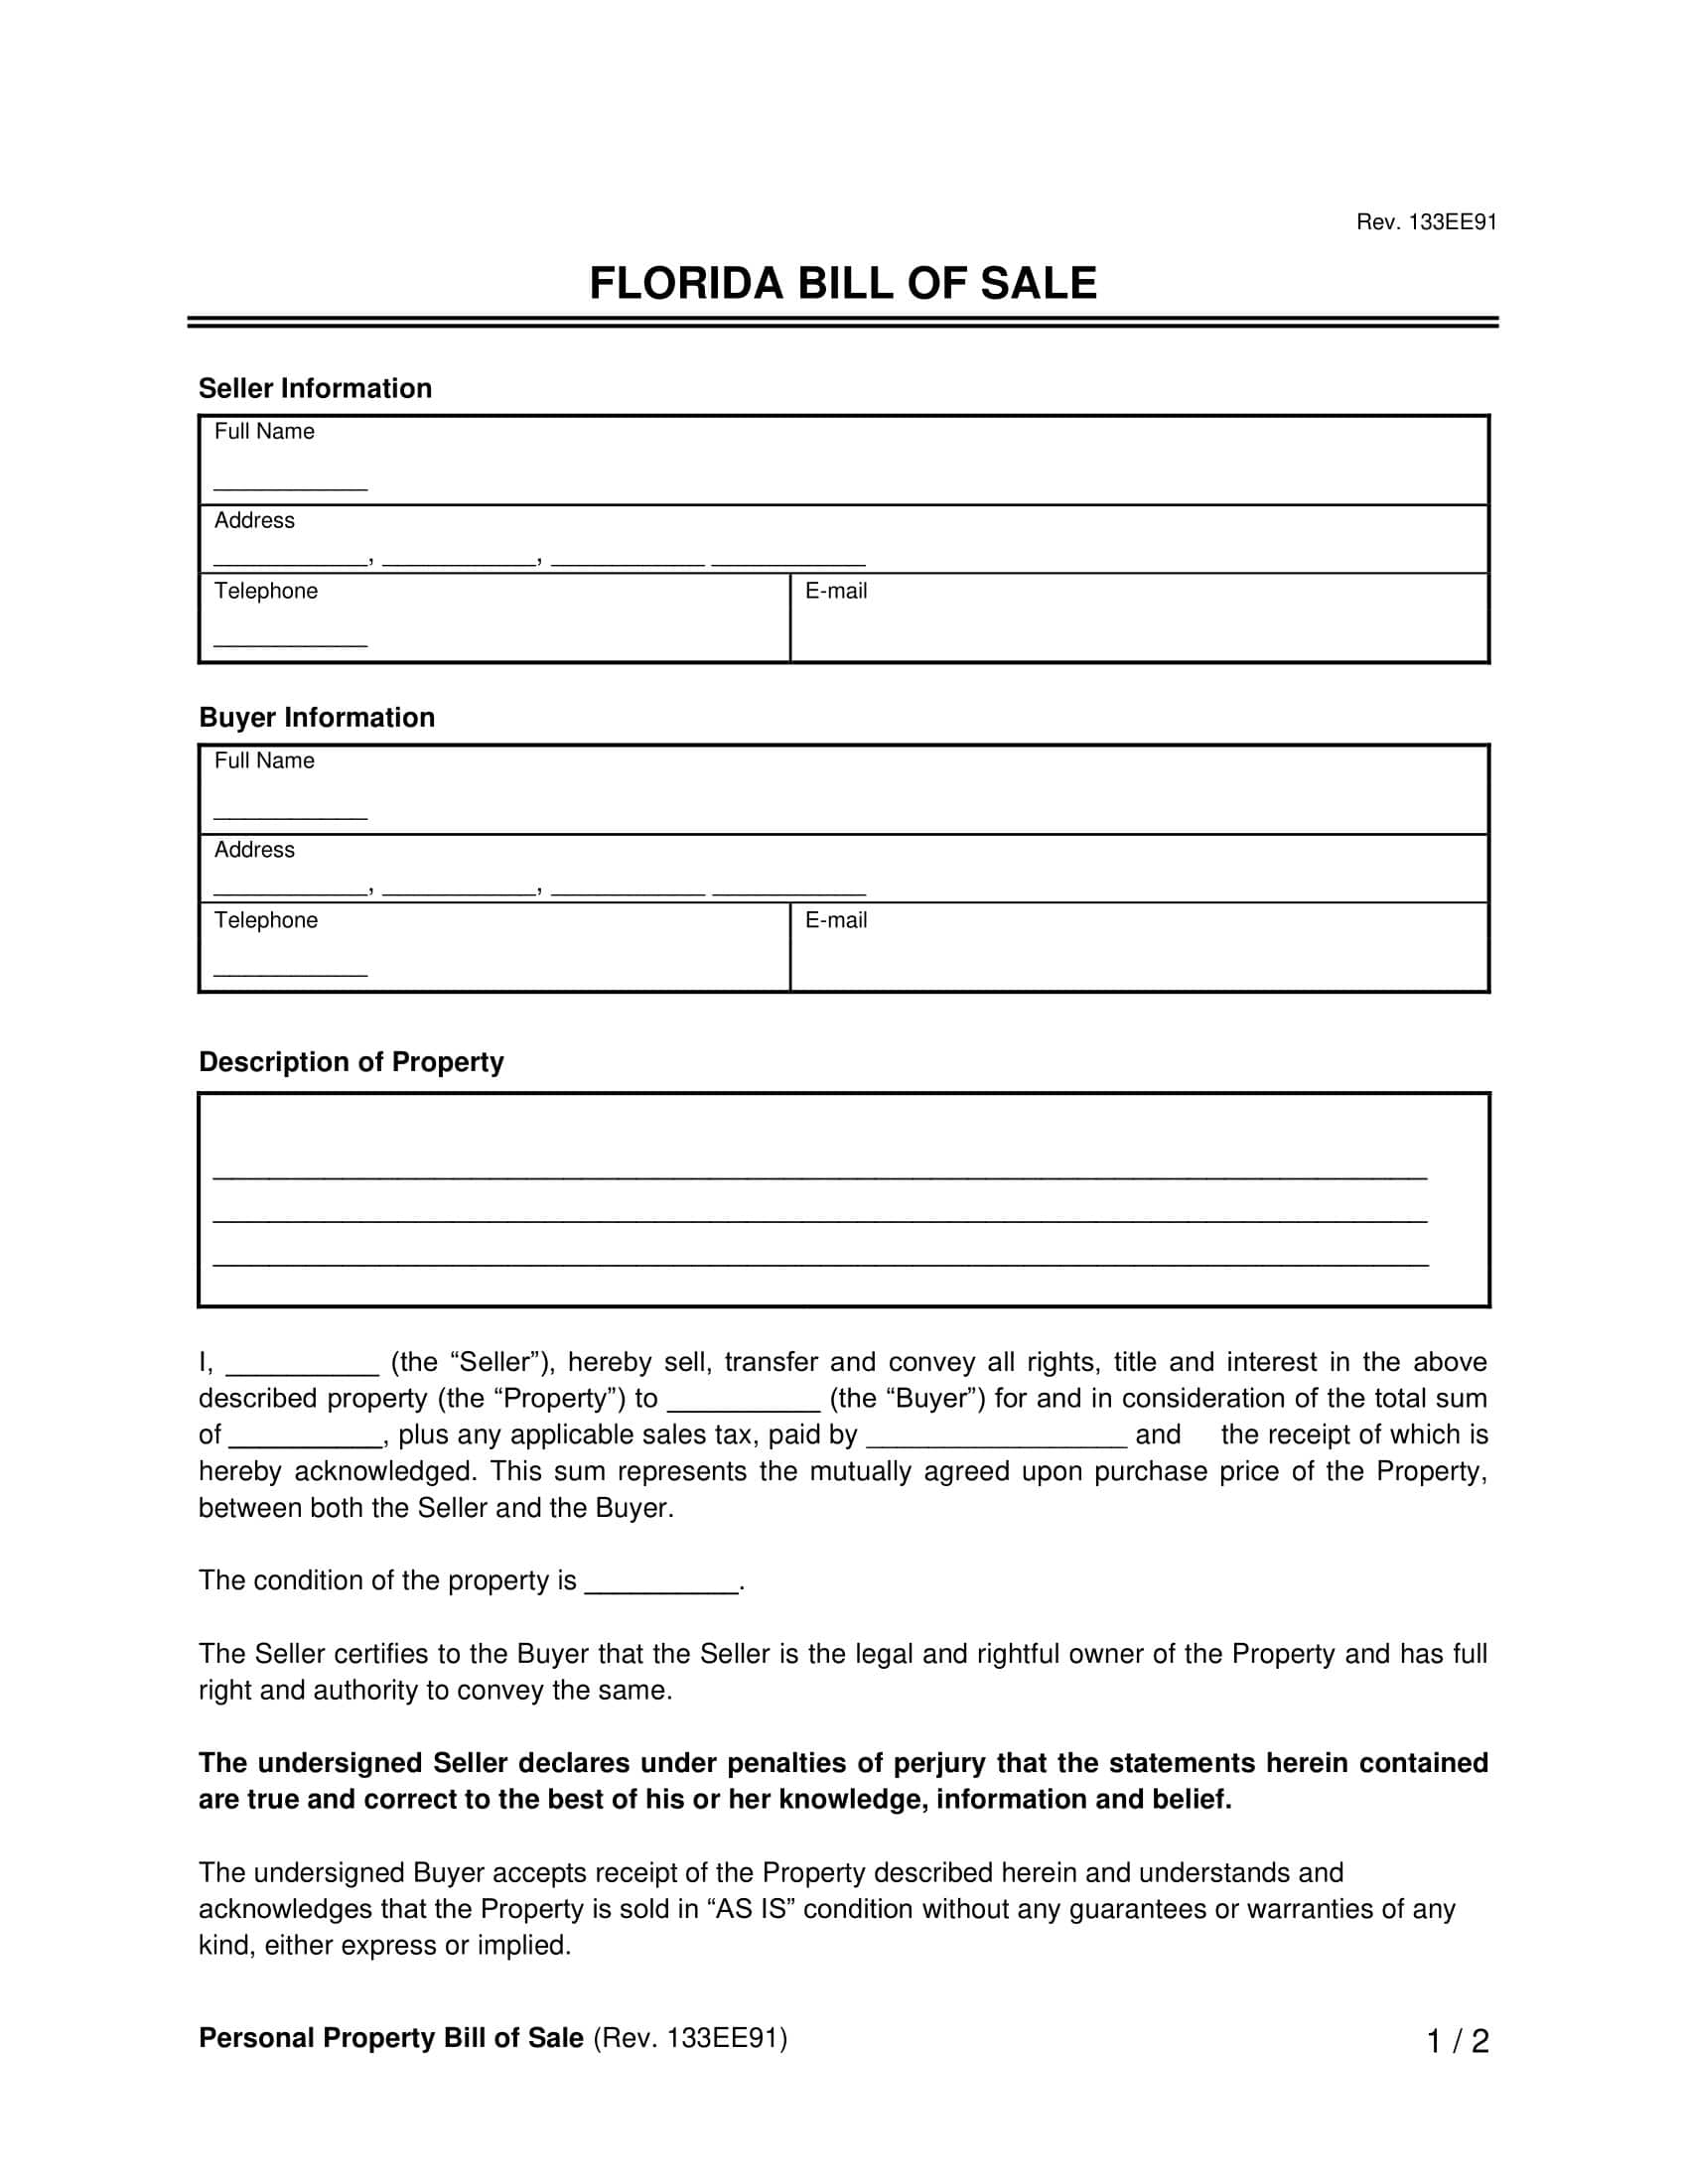 Florida bill of sale screenshot